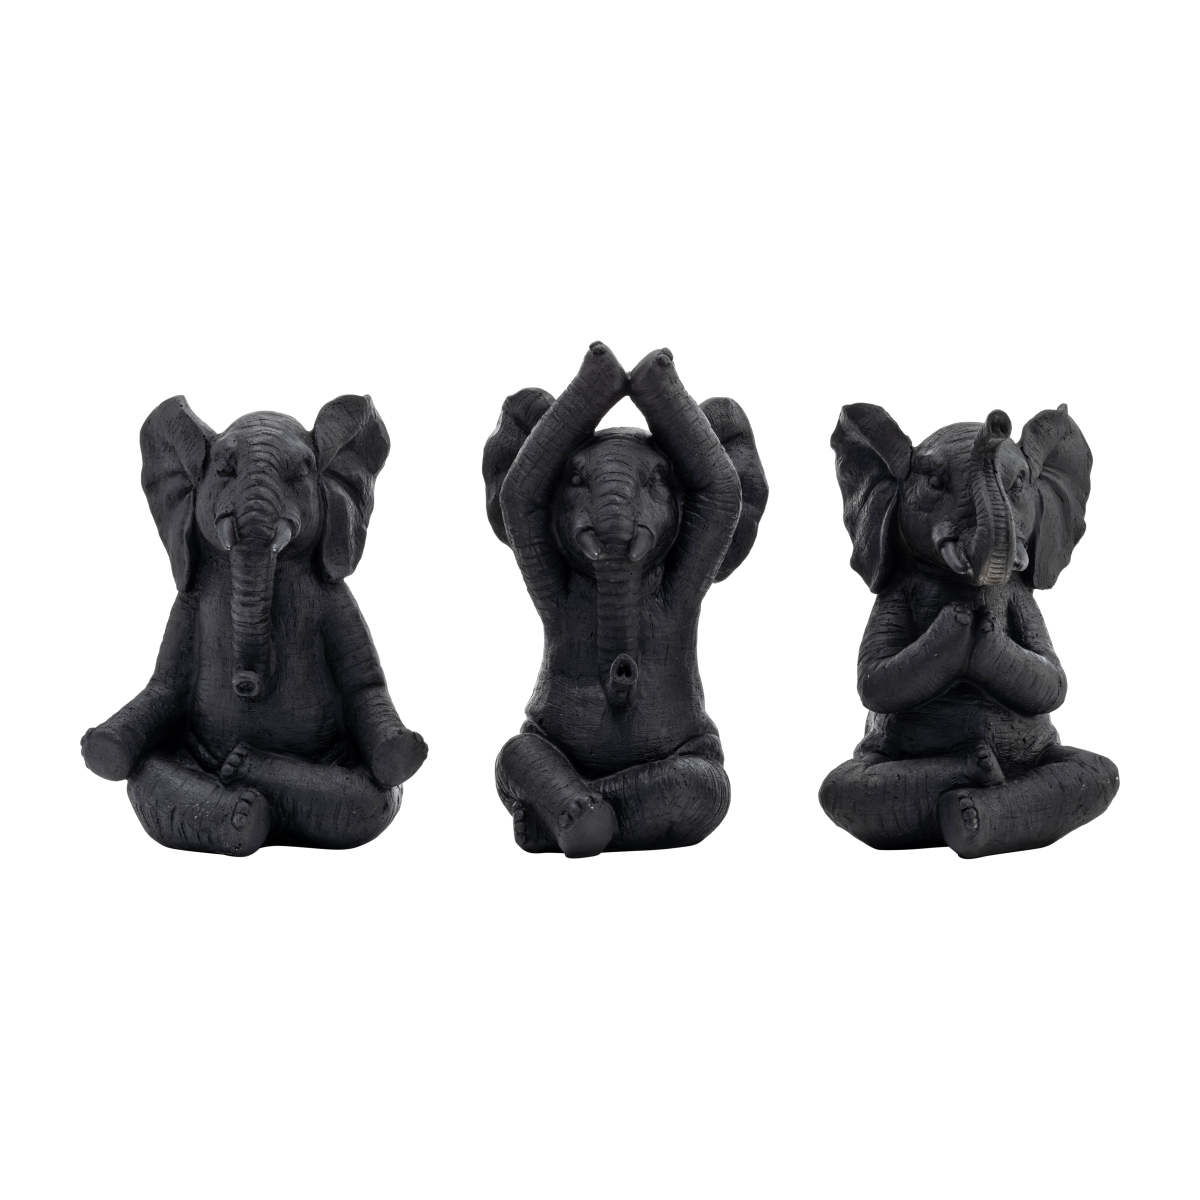 Picture of Sagebrook Home 17103-03 8 in. Resin Yoga Elephants Figurine, Black - Set of 3